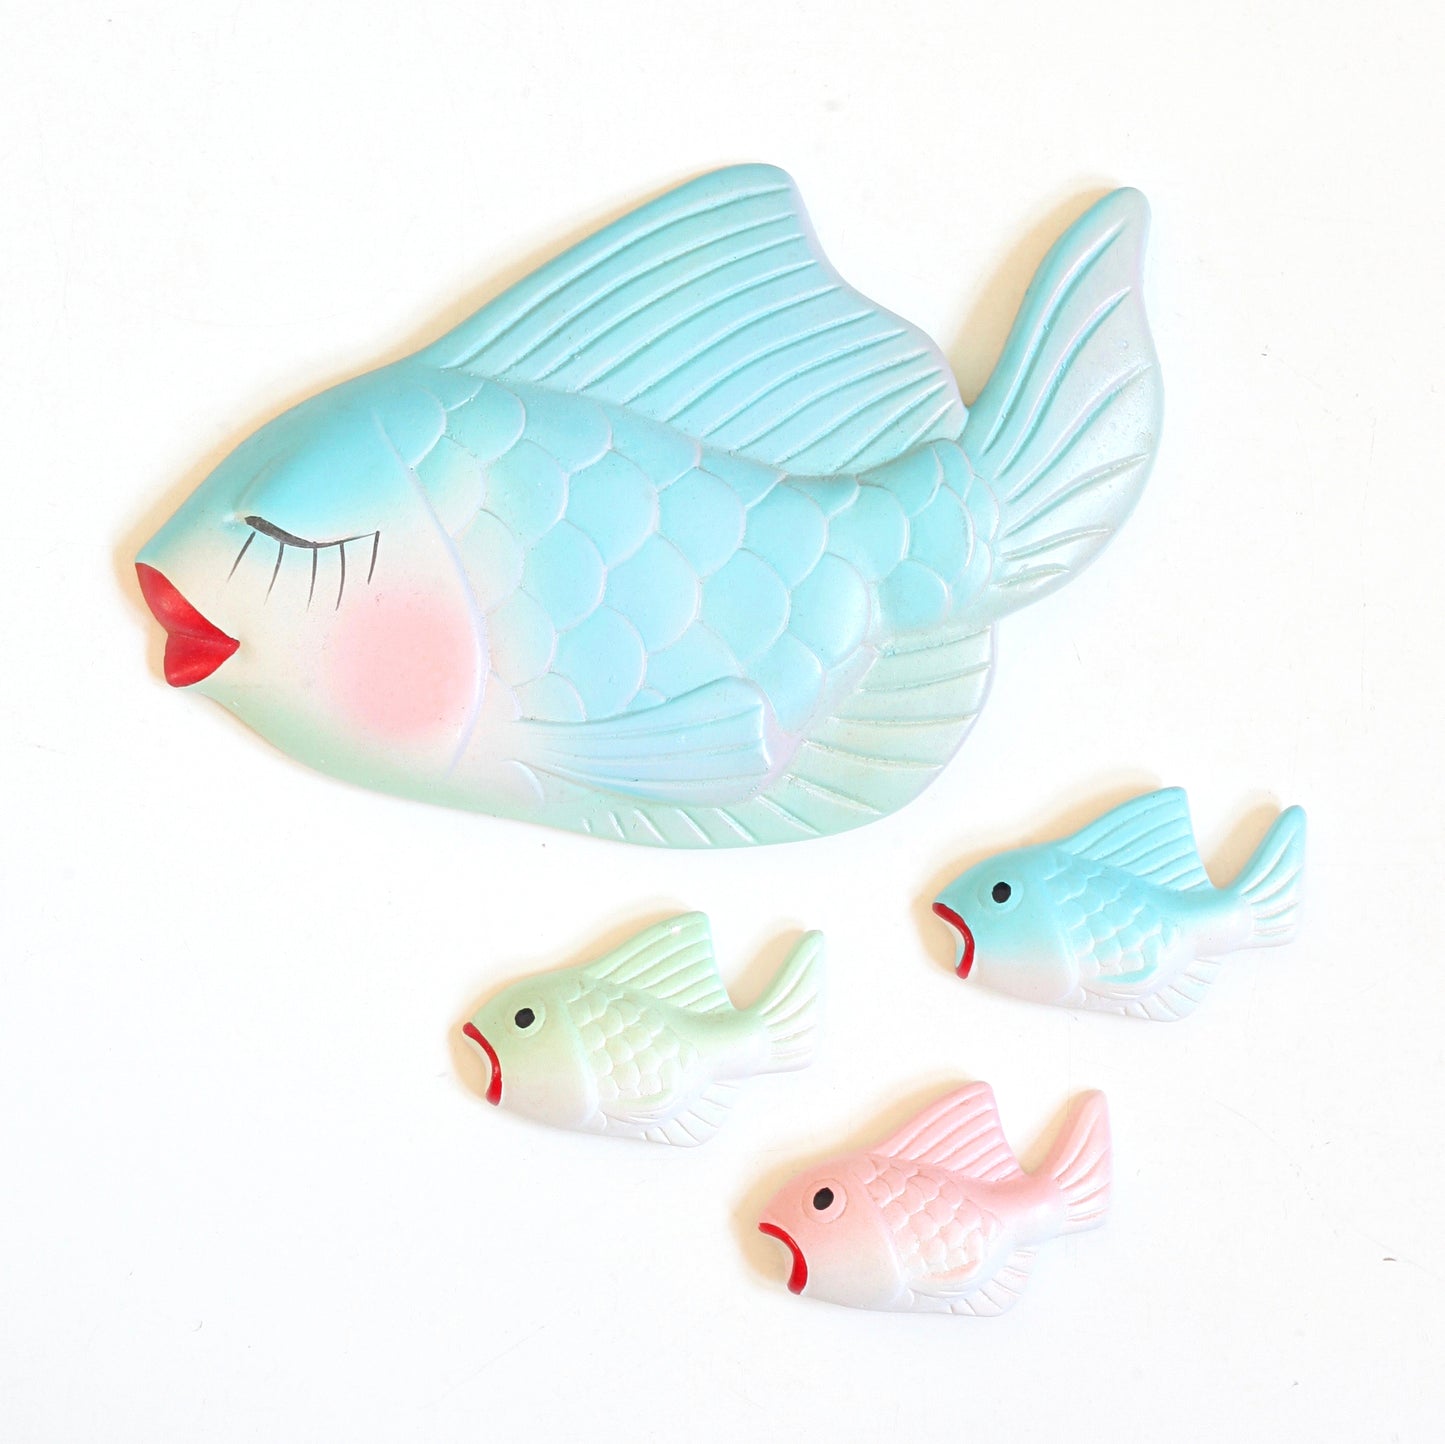 SOLD - Mid Century Pastel Chalkware Fish Family